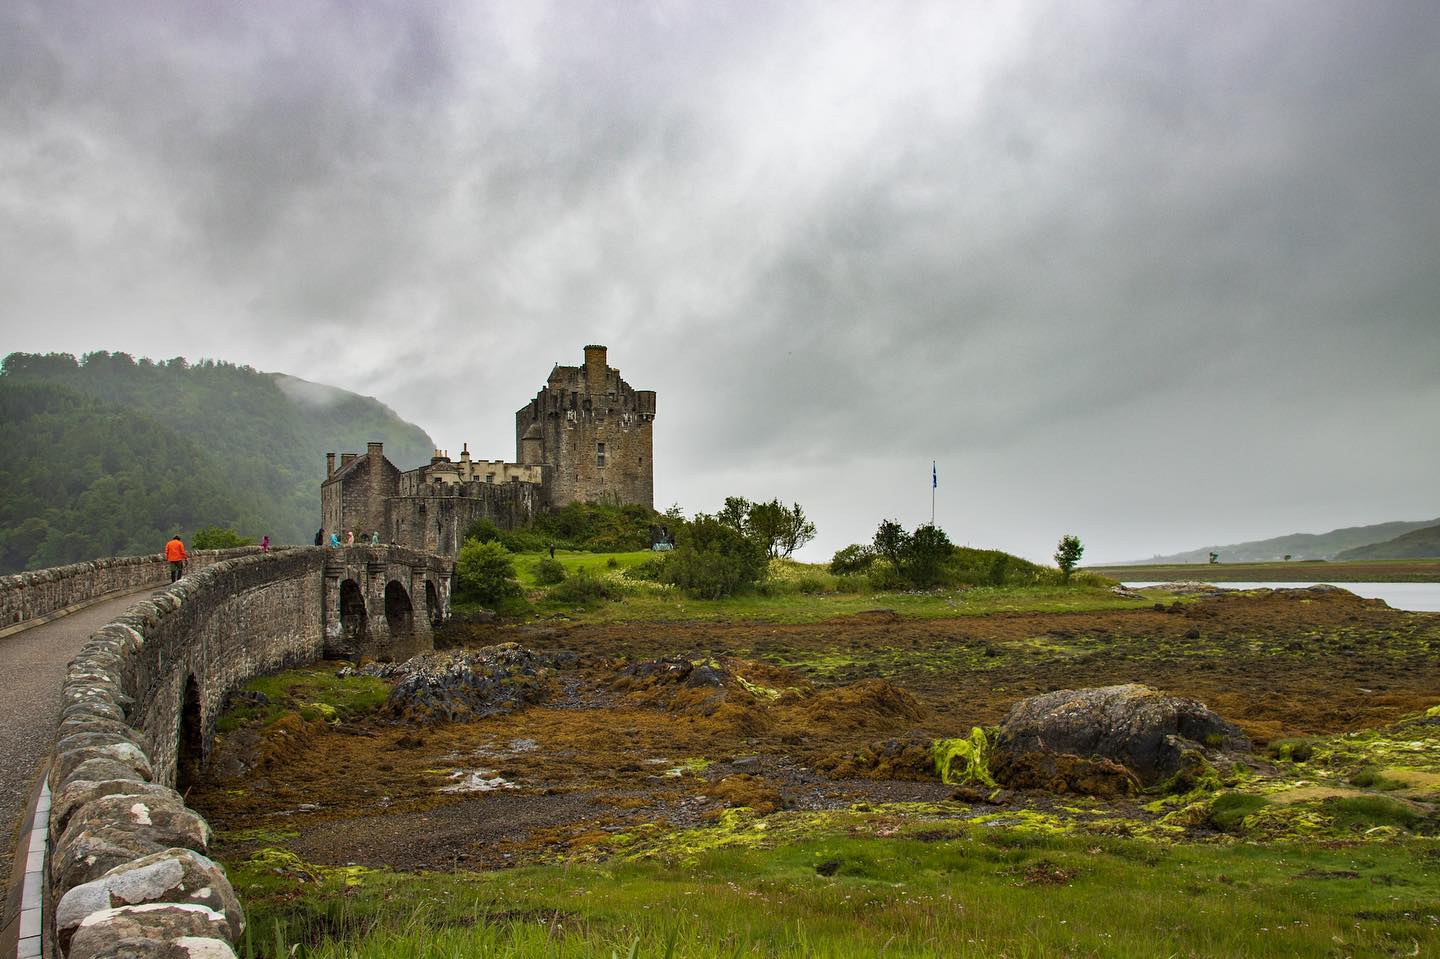 Eilean Donan castle is just beautiful on our way to Isle of Skye last week #visitscotland #scotlandexplore #scotlandhighlands #castlesofscotland #castlesofinstagram #eileandonancastle #nc500 #roadtrip